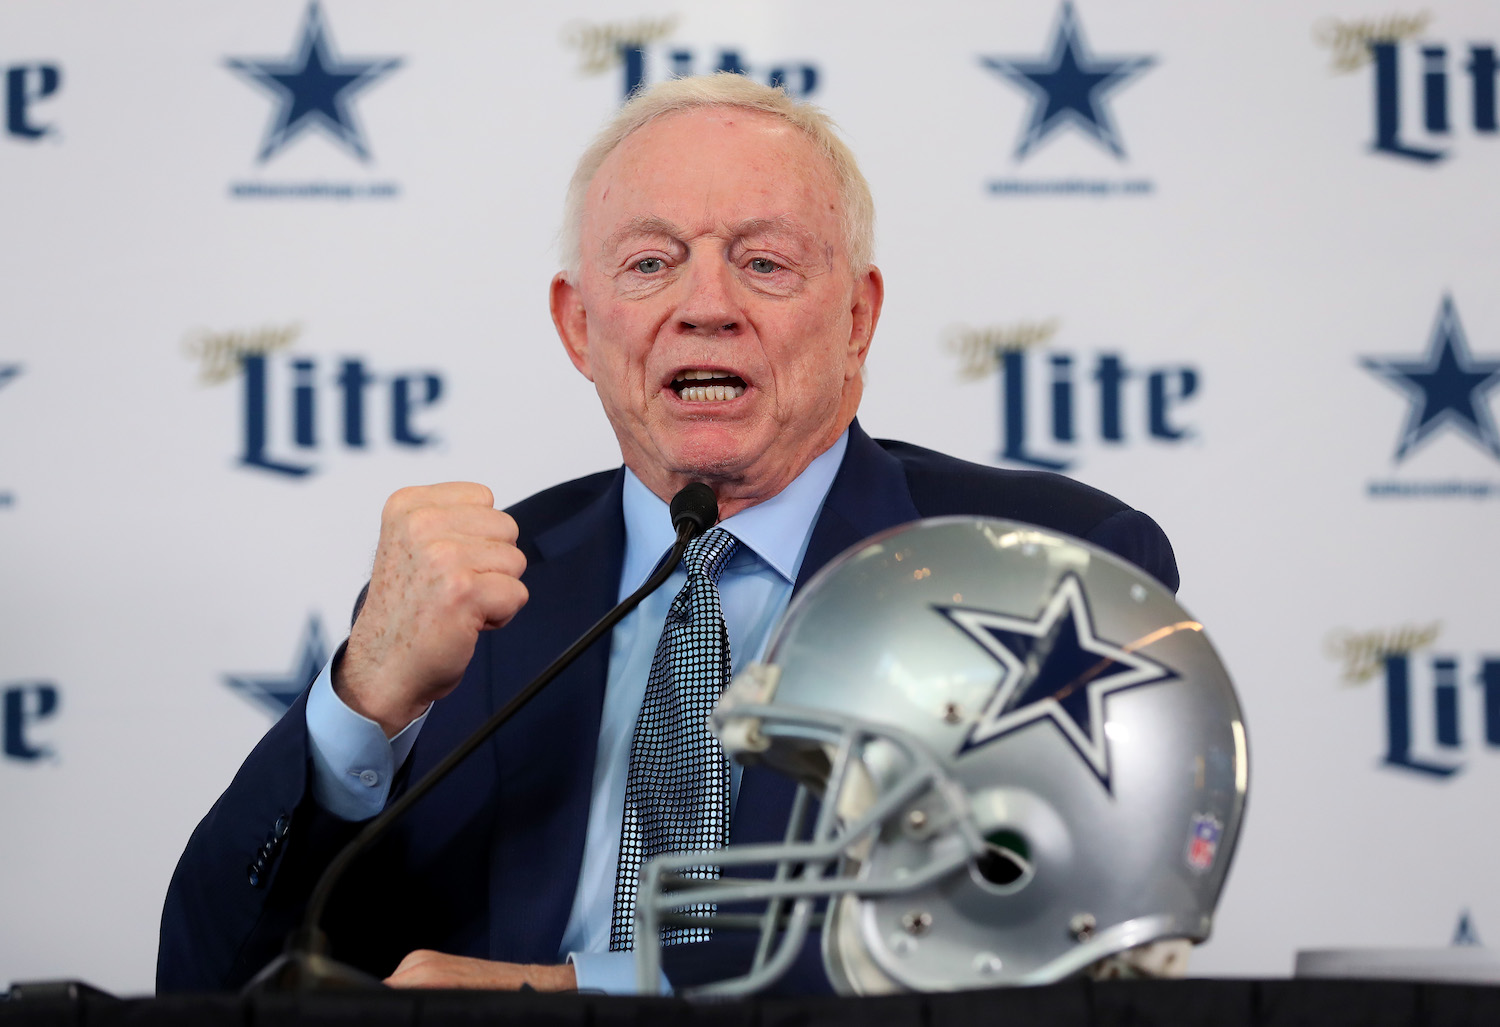 Dallas Cowboys owner Jerry Jones talks to media